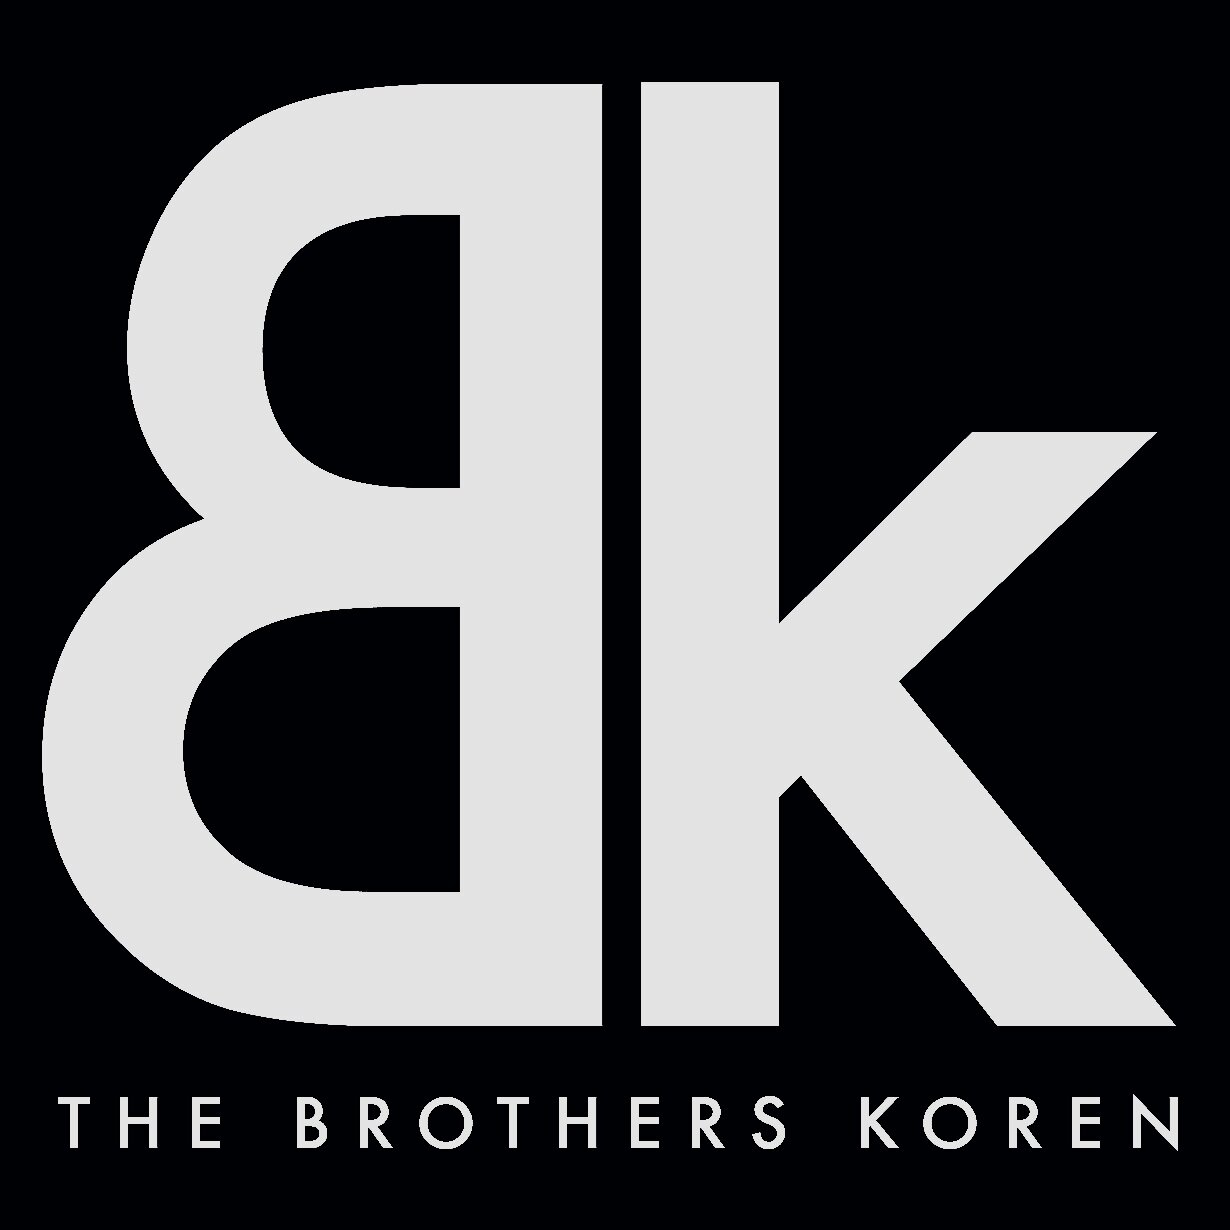 The Brothers Koren